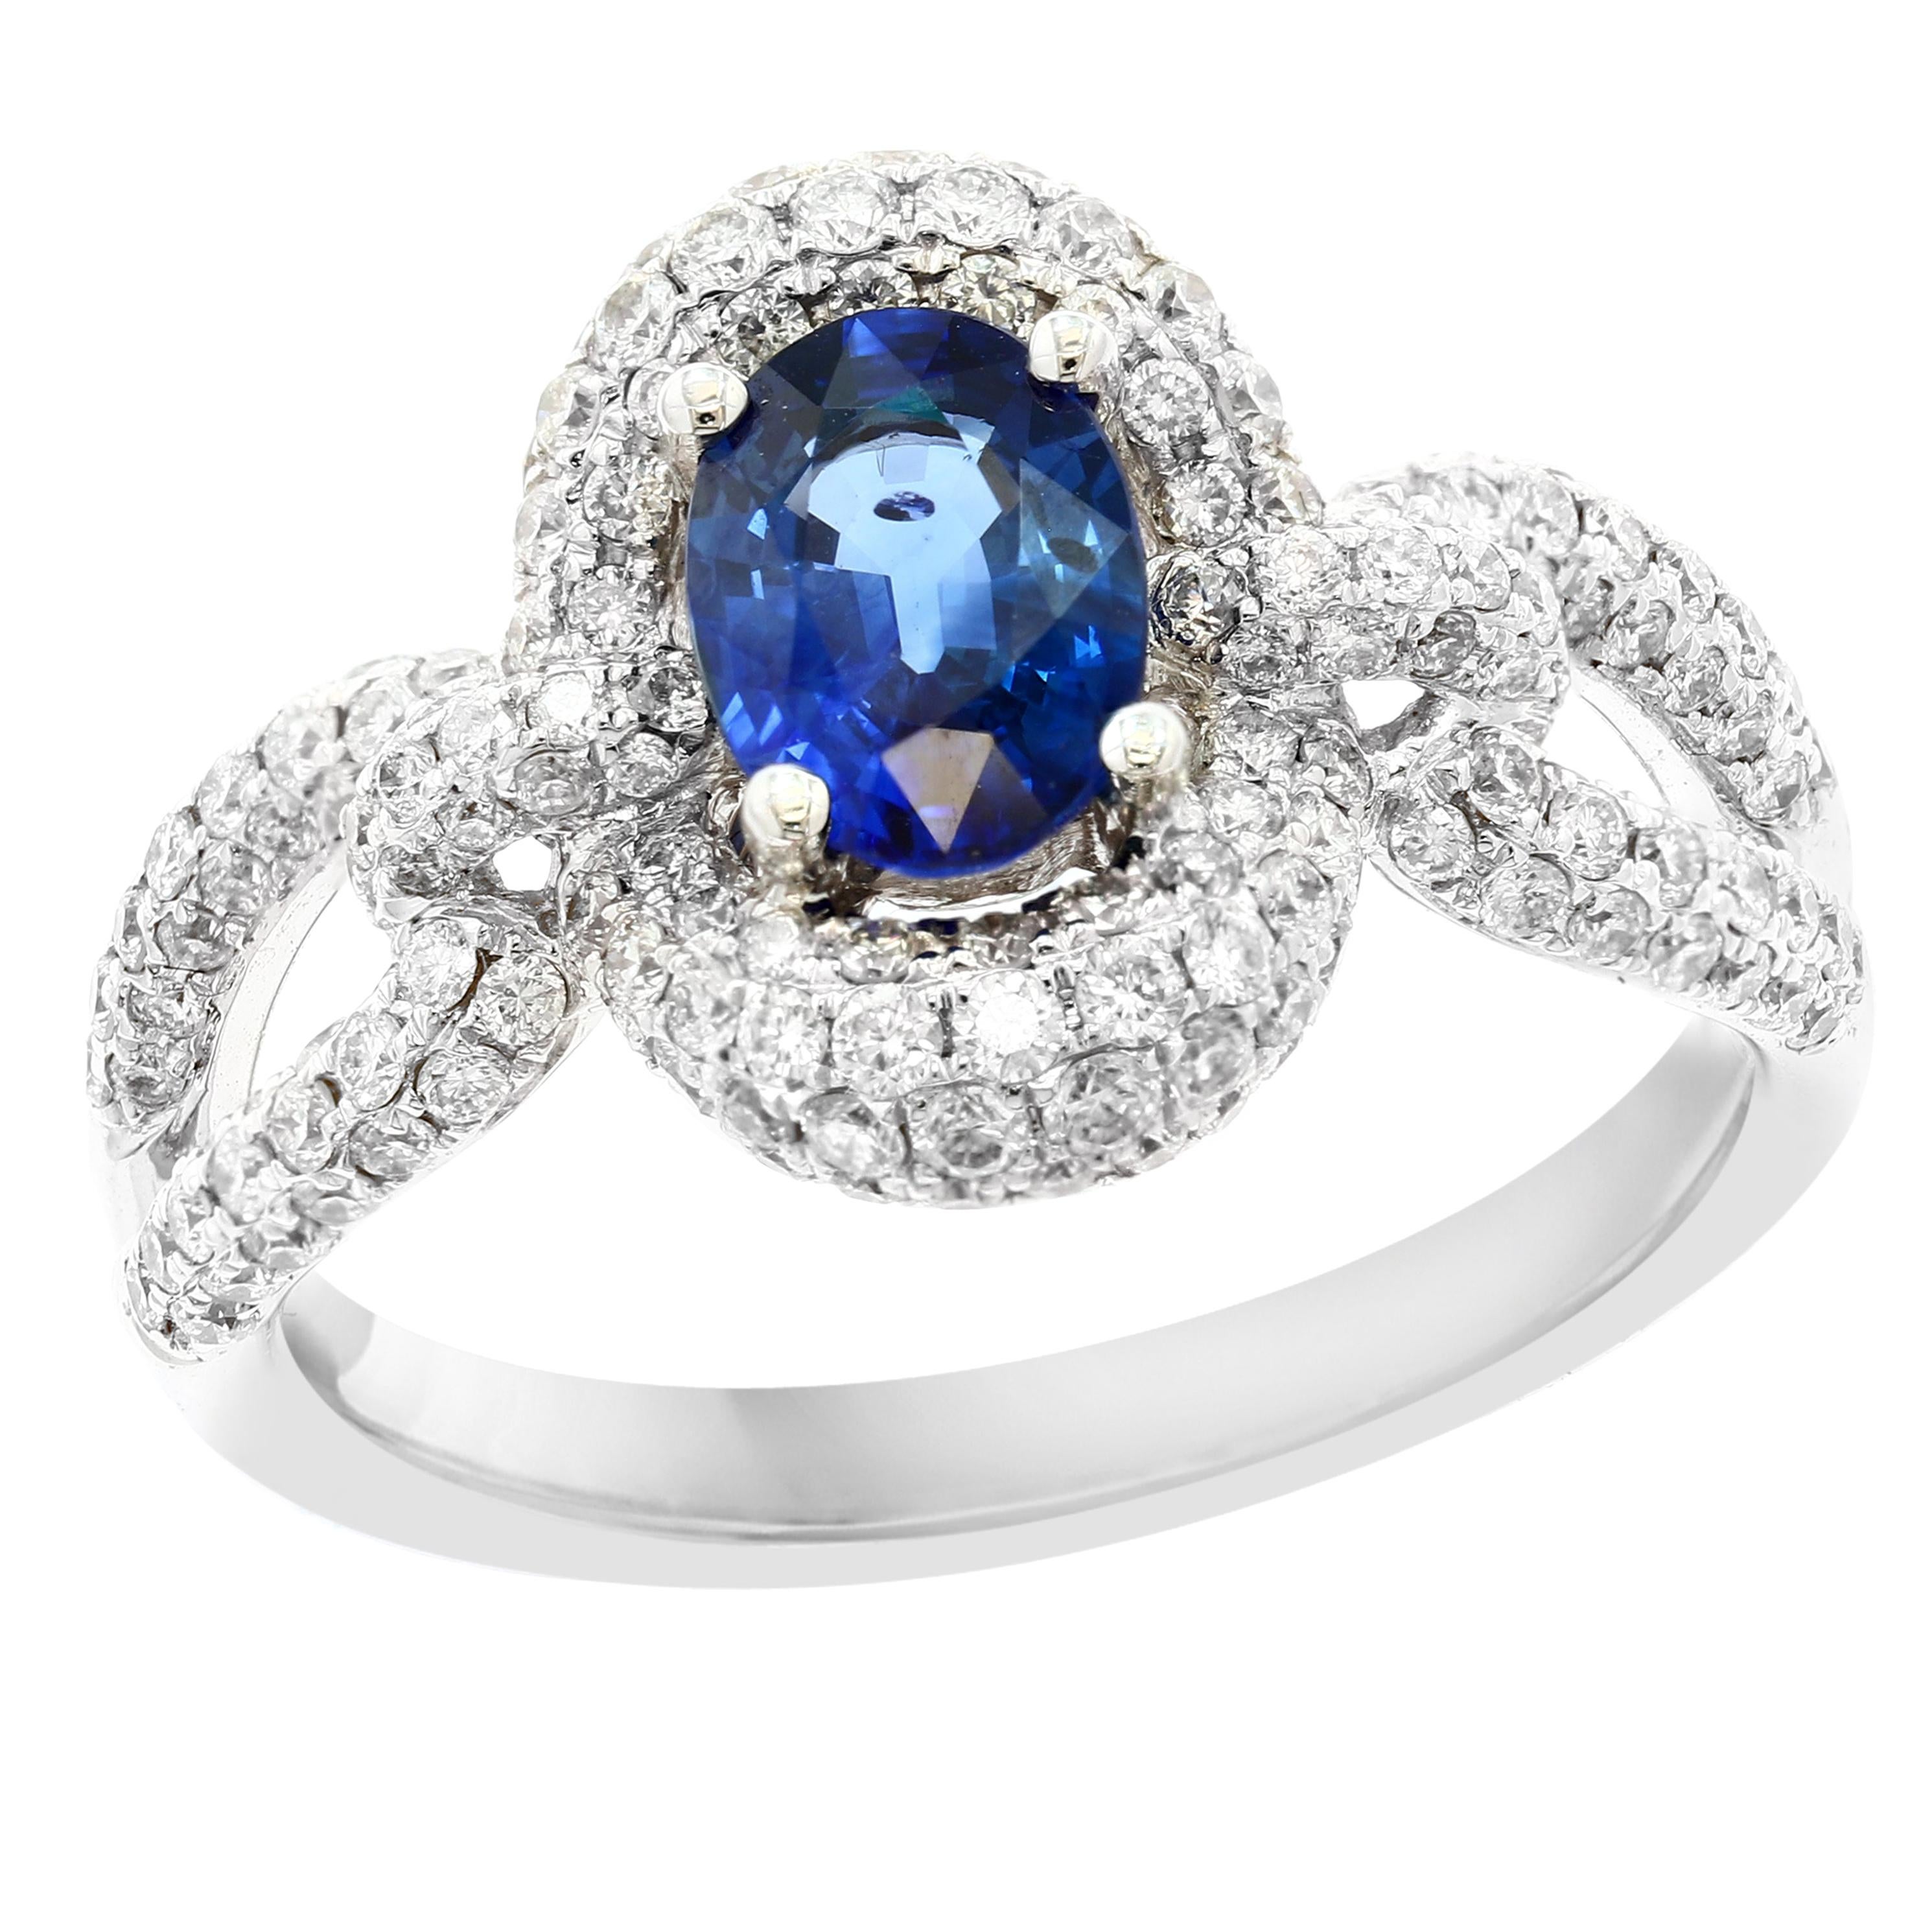 Grandeur 0.94 Carat Oval Blue Sapphire Diamond 18K White Gold Engagement Ring